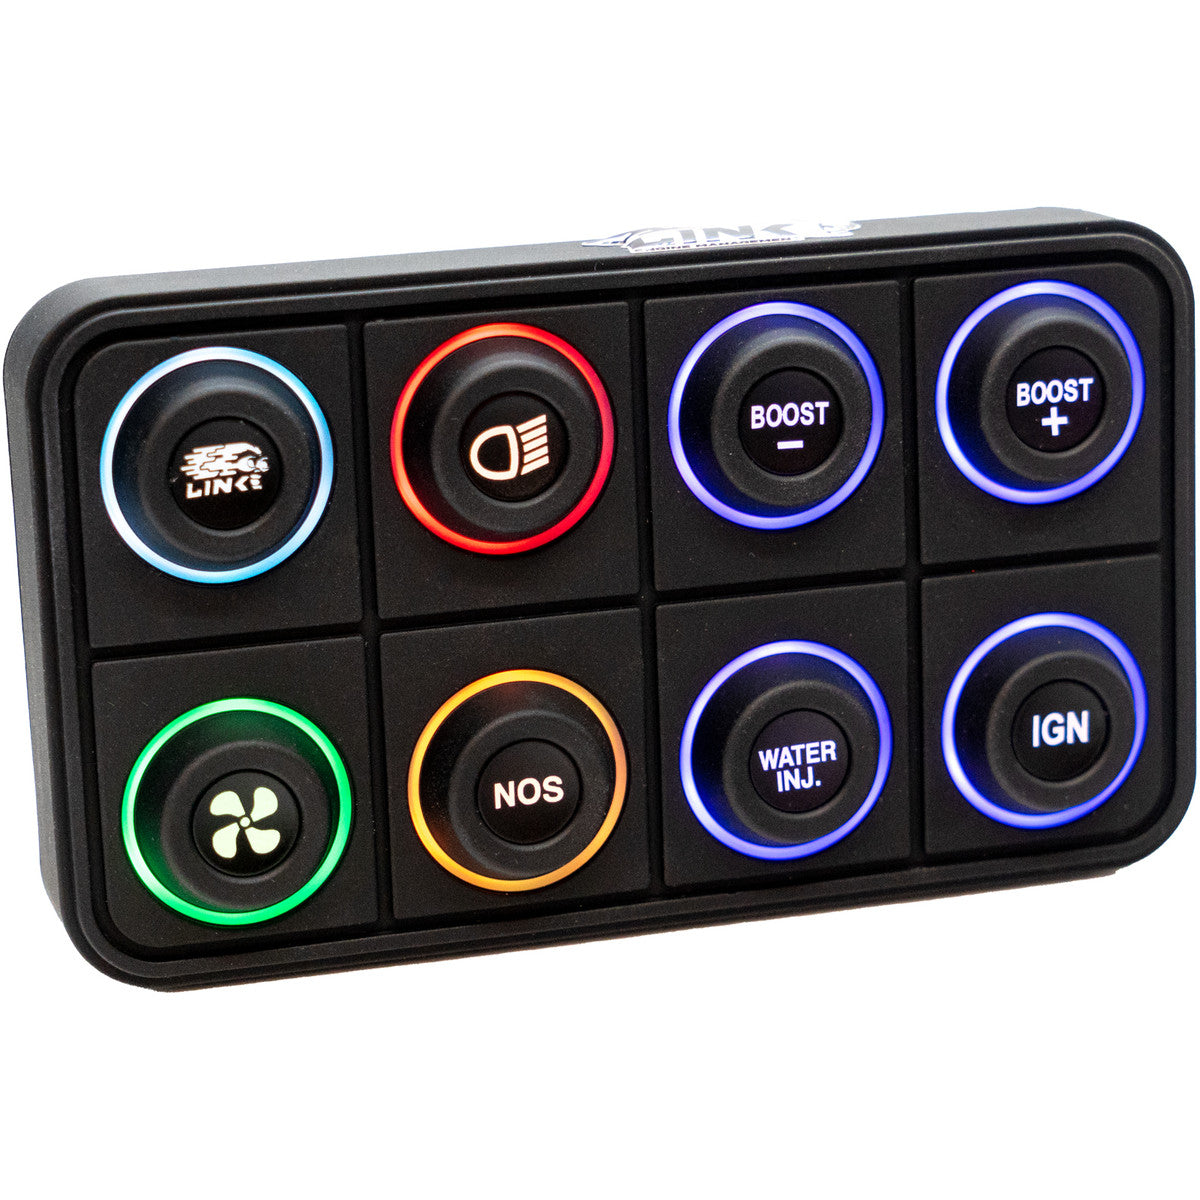 Link ECU CAN Keypad 8 button